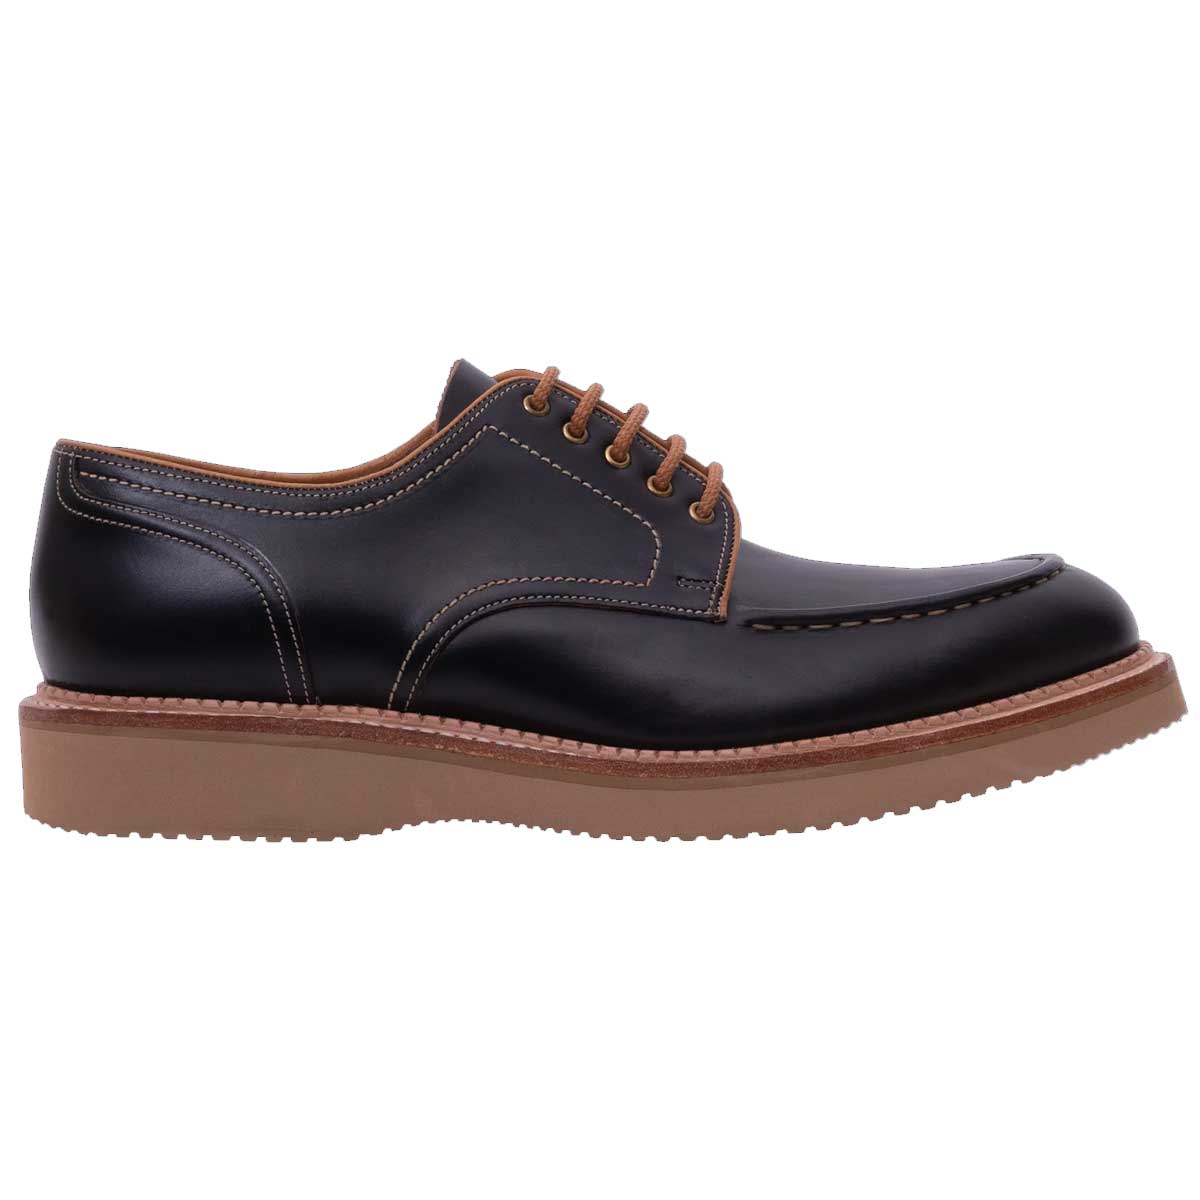 BARKER Michigan Shoes - Mens - Black Waxy Calf